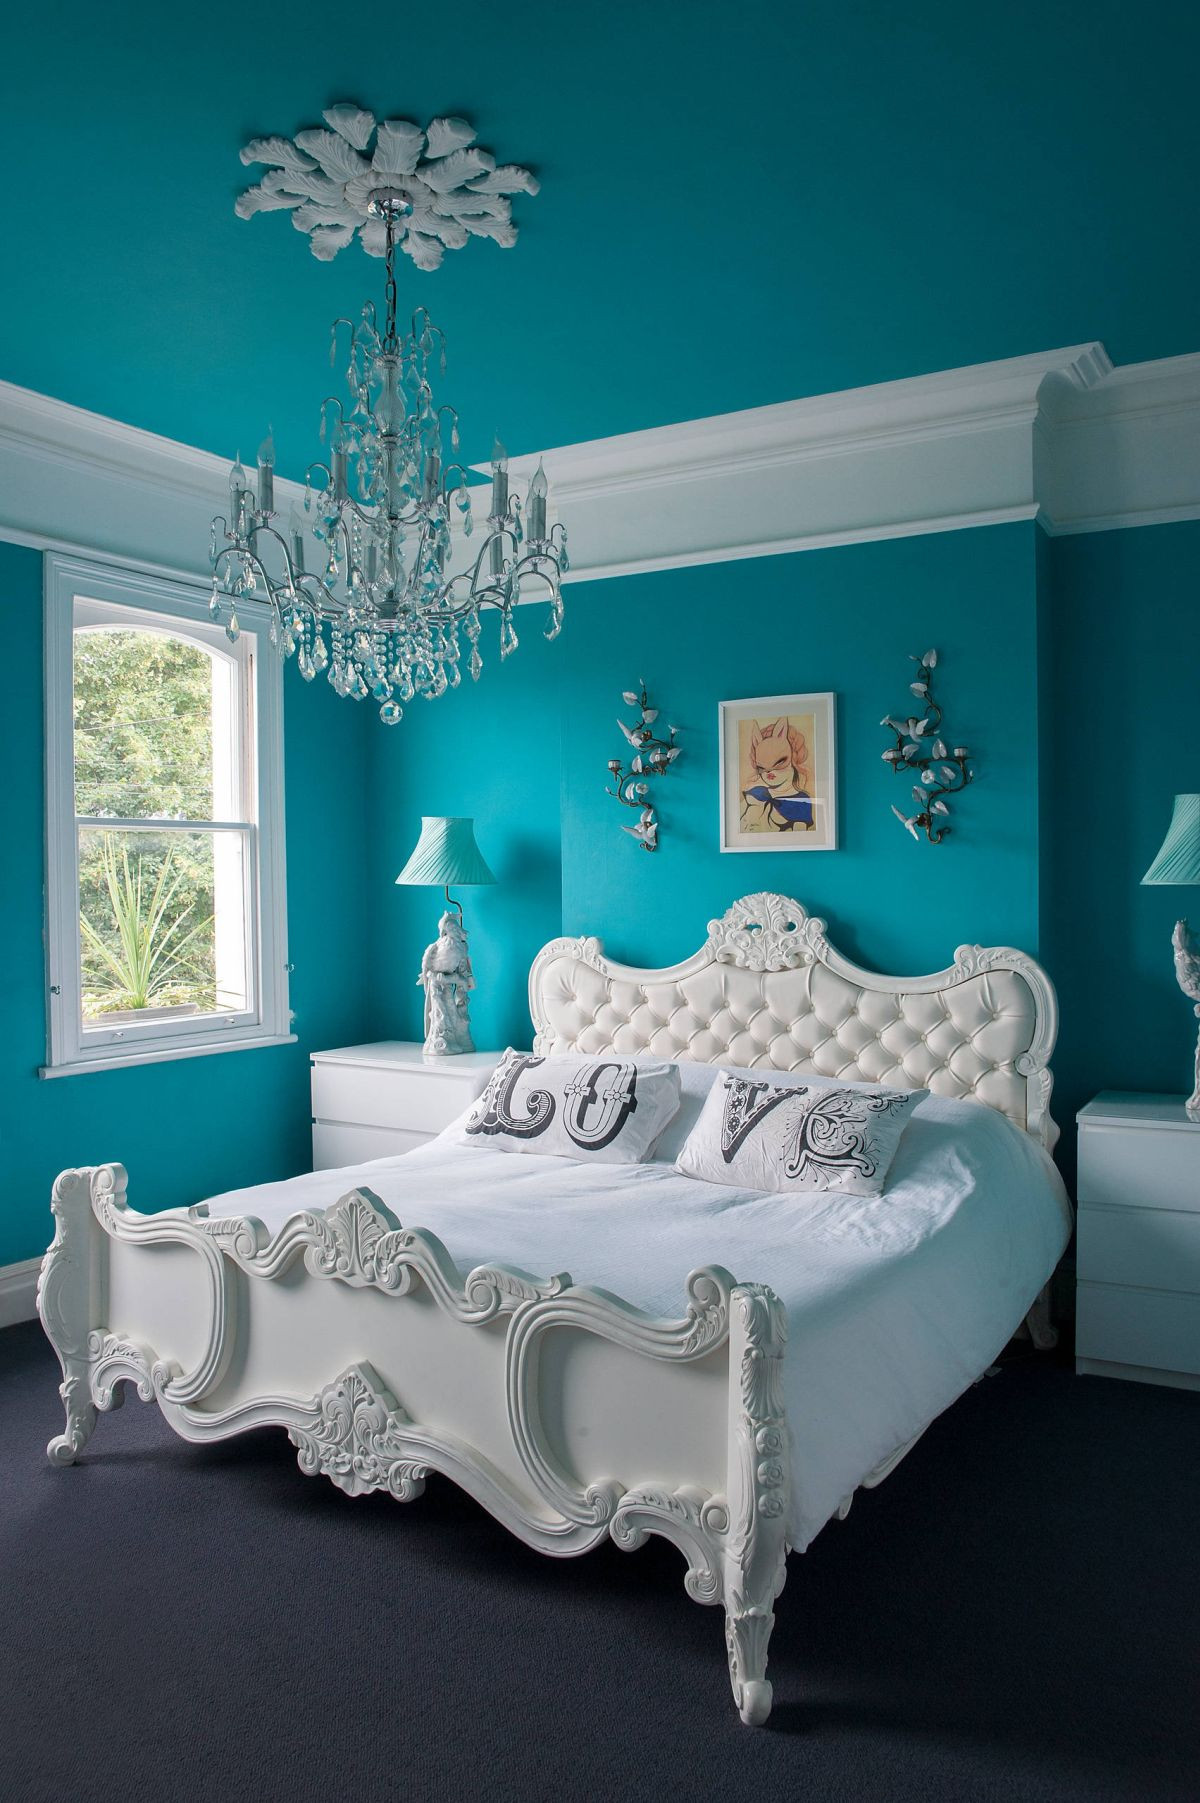 Blue Bedroom Paint Color
 The Four Best Paint Colors For Bedrooms